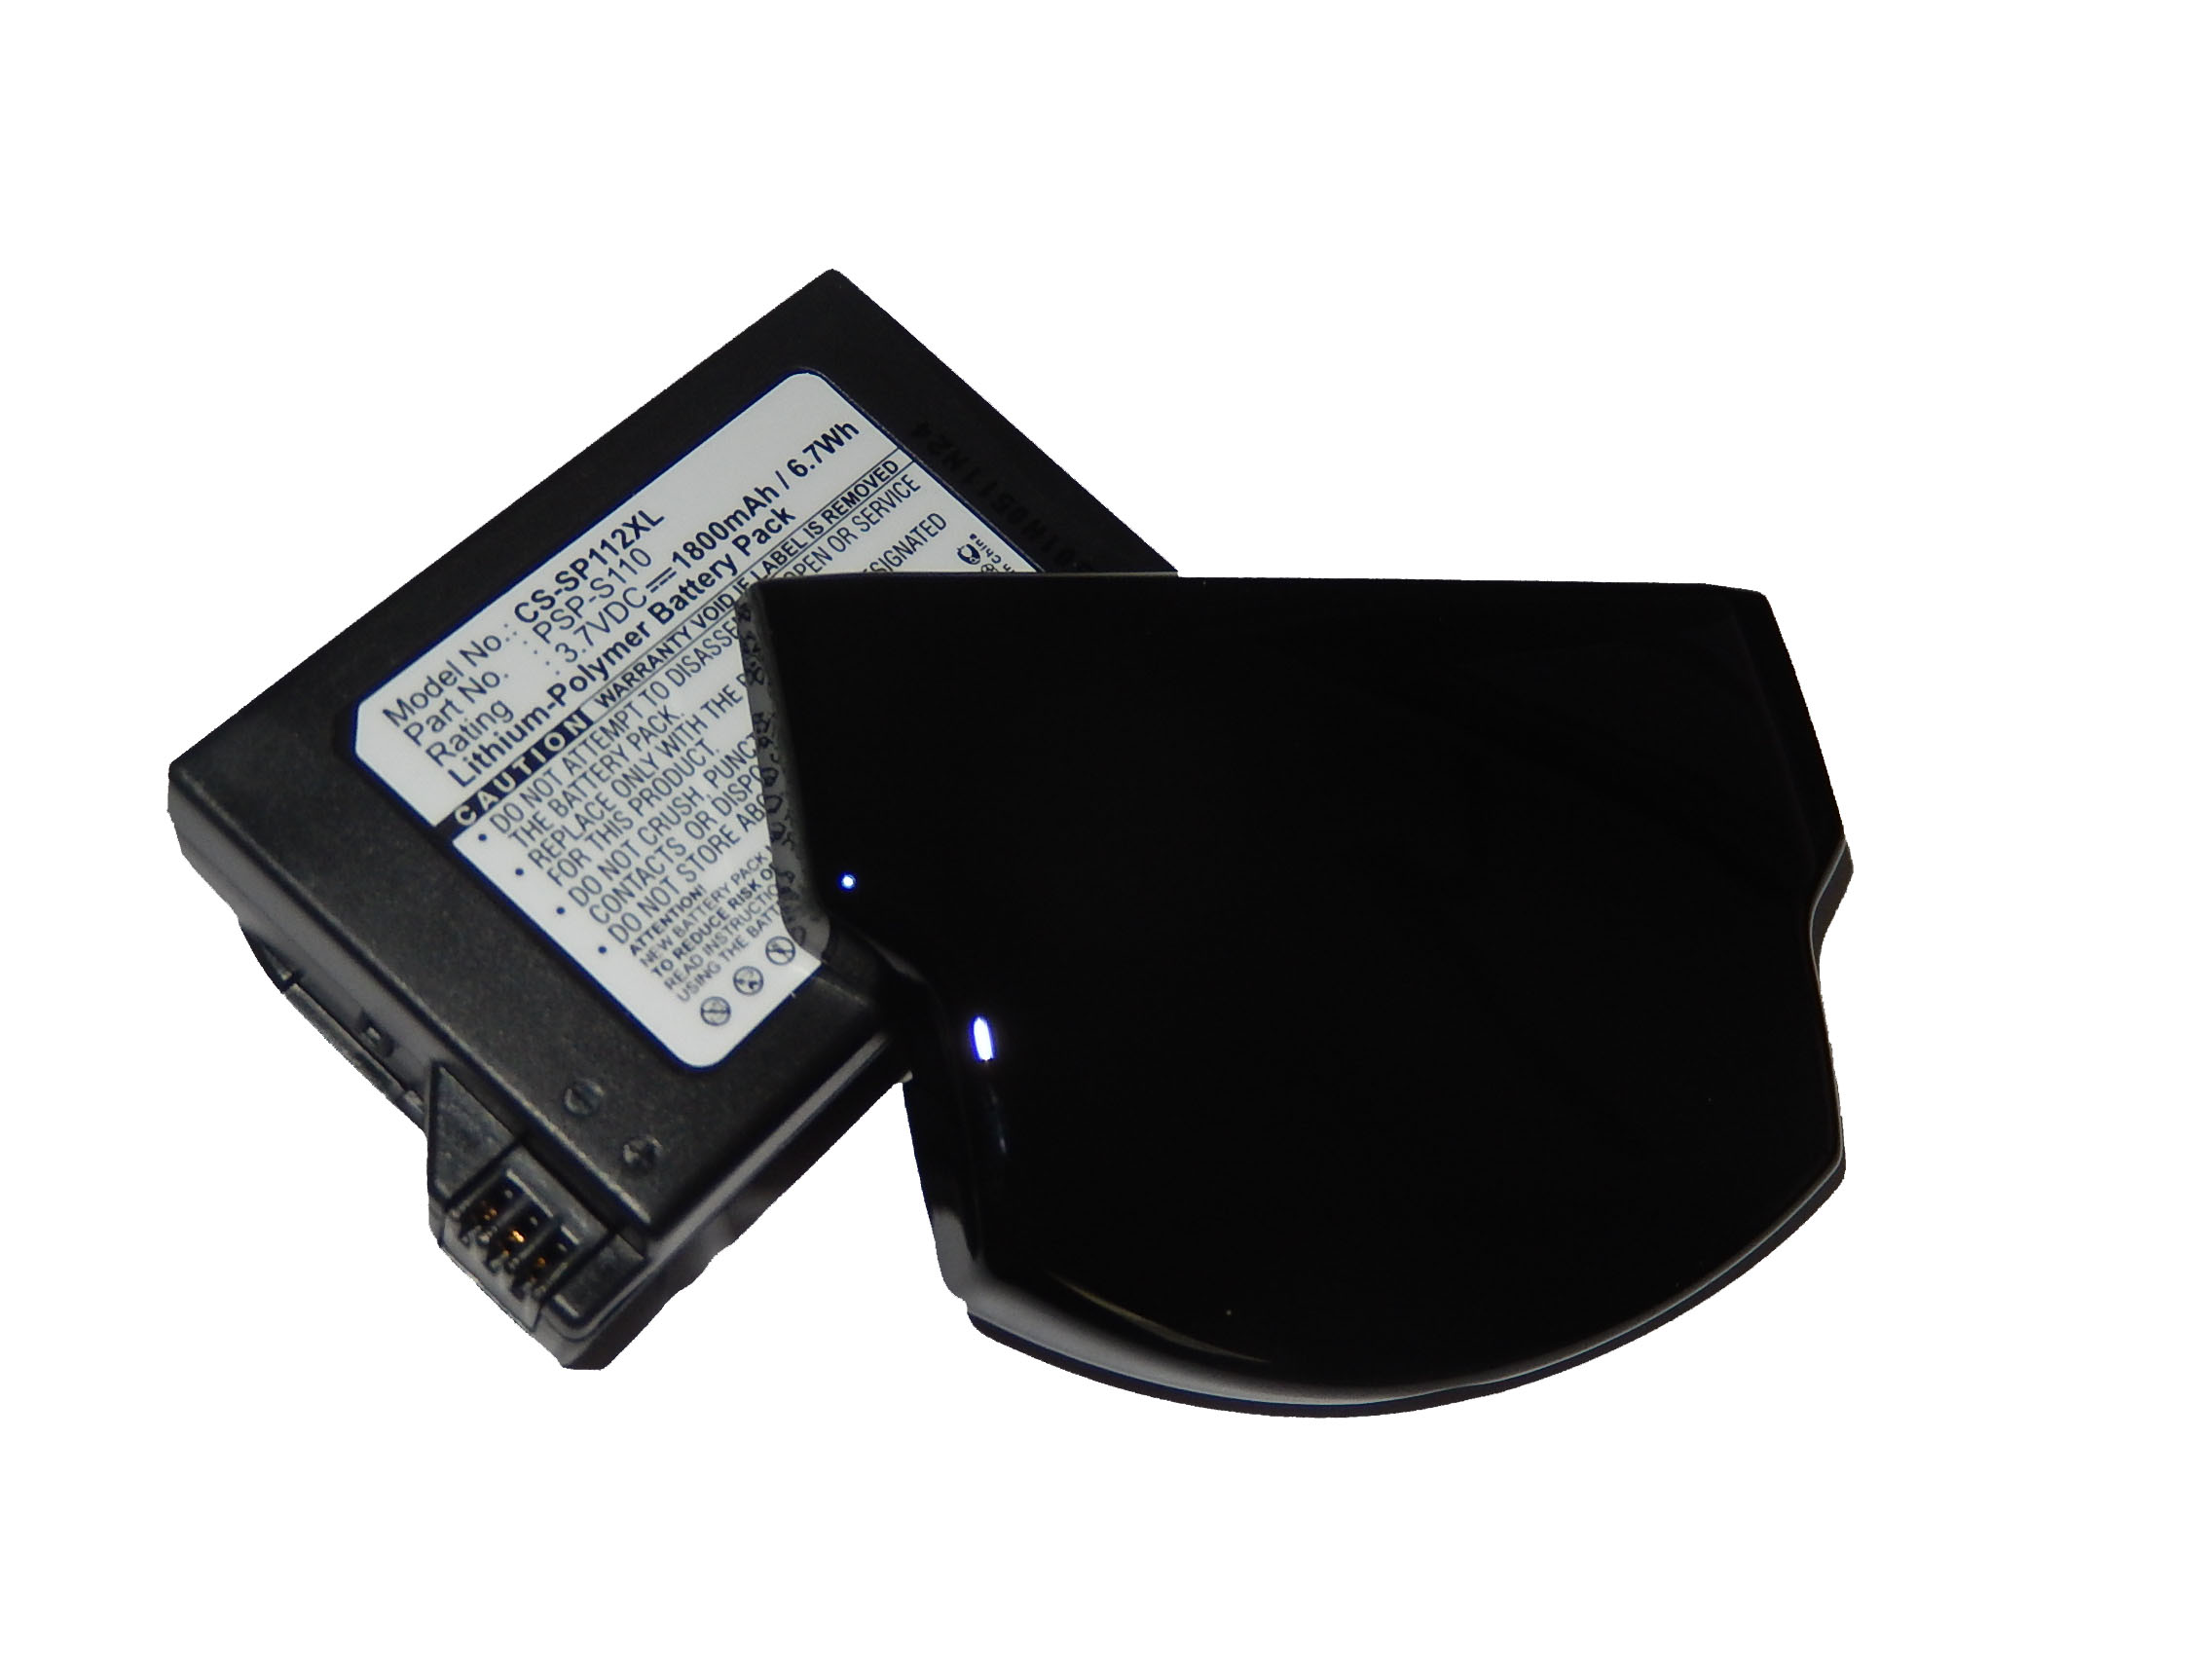 VHBW kompatibel mit - Spielekonsole, Portable PSP-3004, PSP-3002, Li-Polymer 3.7 Brite PSP-3001 Sony 1800 Volt, Akku Playstation PSP-3000